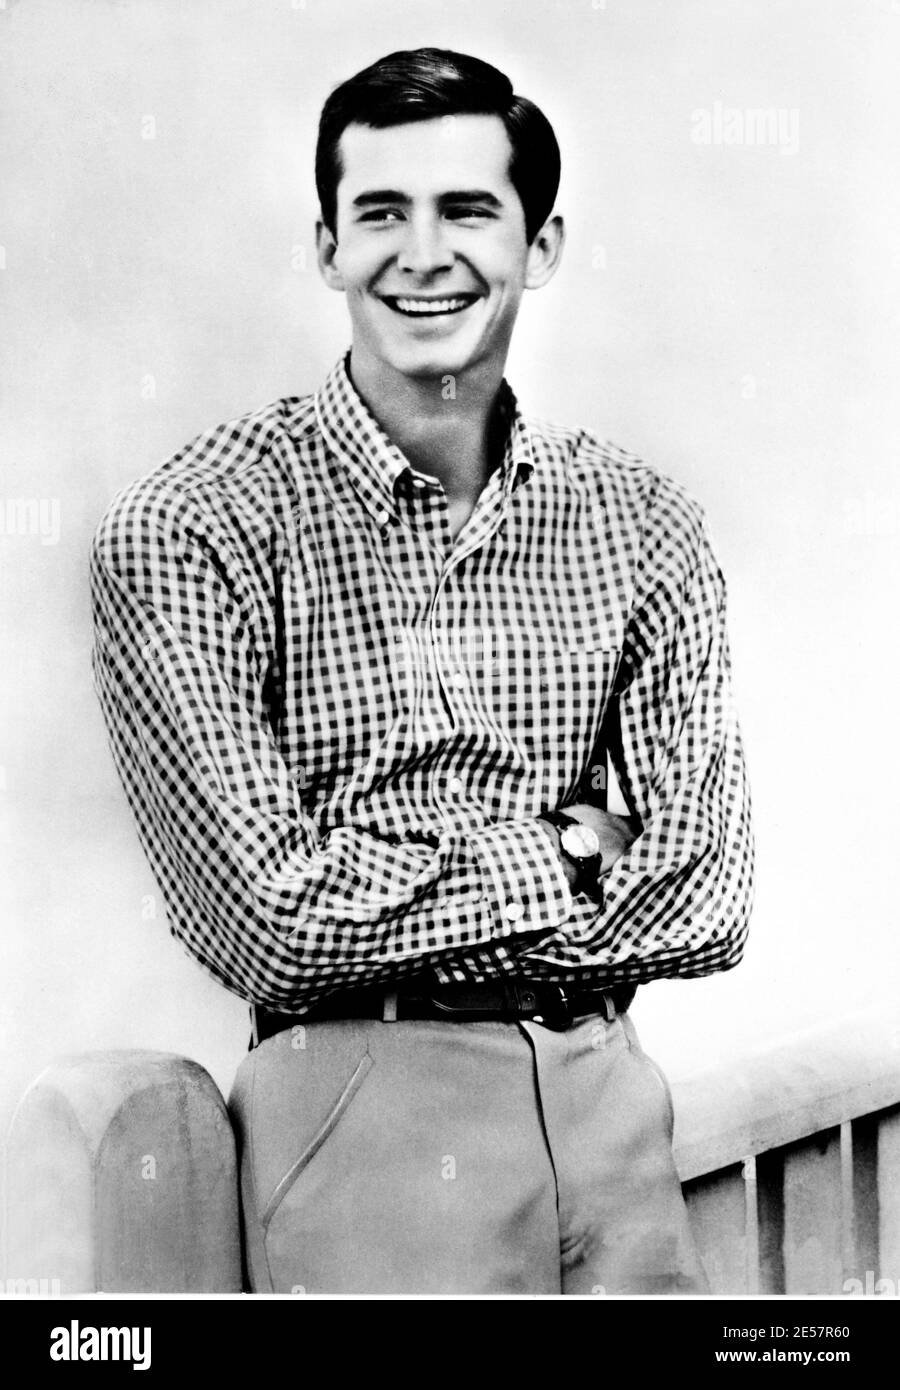 1959 , USA : der Filmschauspieler ANTHONY PERKINS ( 1932 - 1992 ) in AM STRAND ( L'ultima spiaggia ) Von Stanley Kramer - FILM - KINO - Attore - Portrait - ritratto - camicia - Shirt - Smile - sorriso - GAY - LGBT - omosessuale - omosessualuità - Homosexuell - Homosexualität ---- Archivio GBB Stockfoto